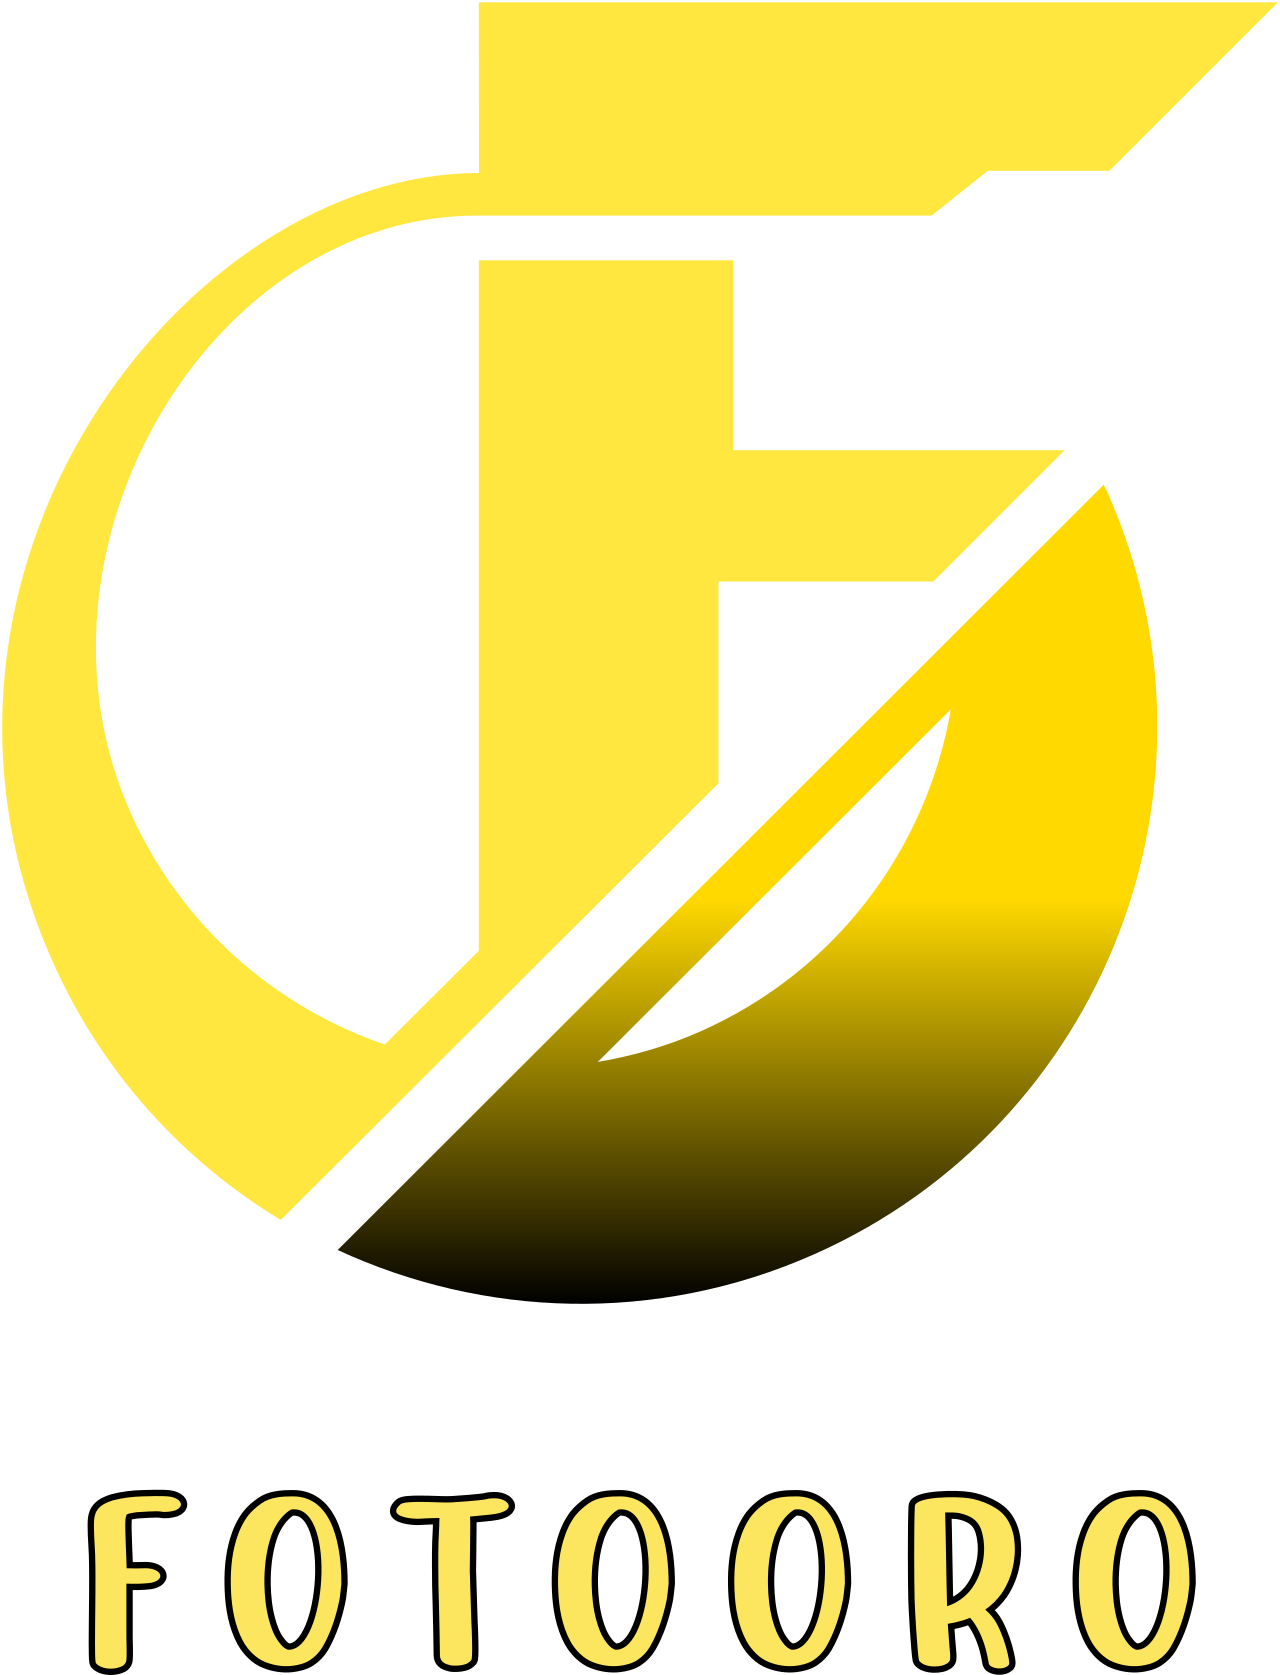 fotooro's logo